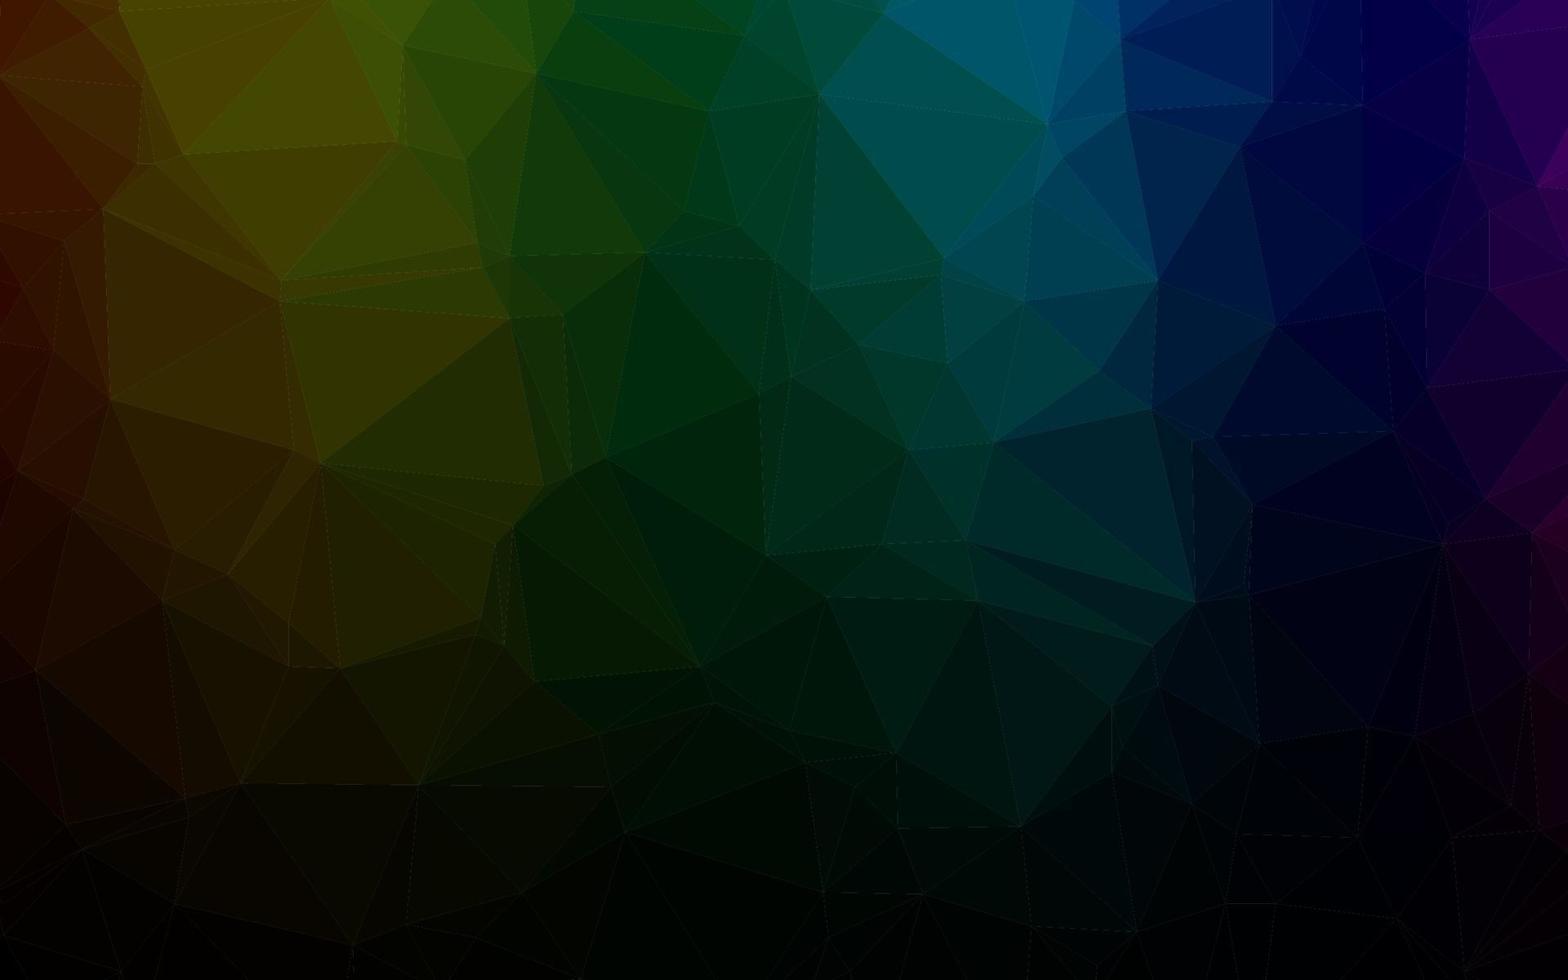 layout abstrato de polígono de vetor de arco-íris multicolorido escuro.